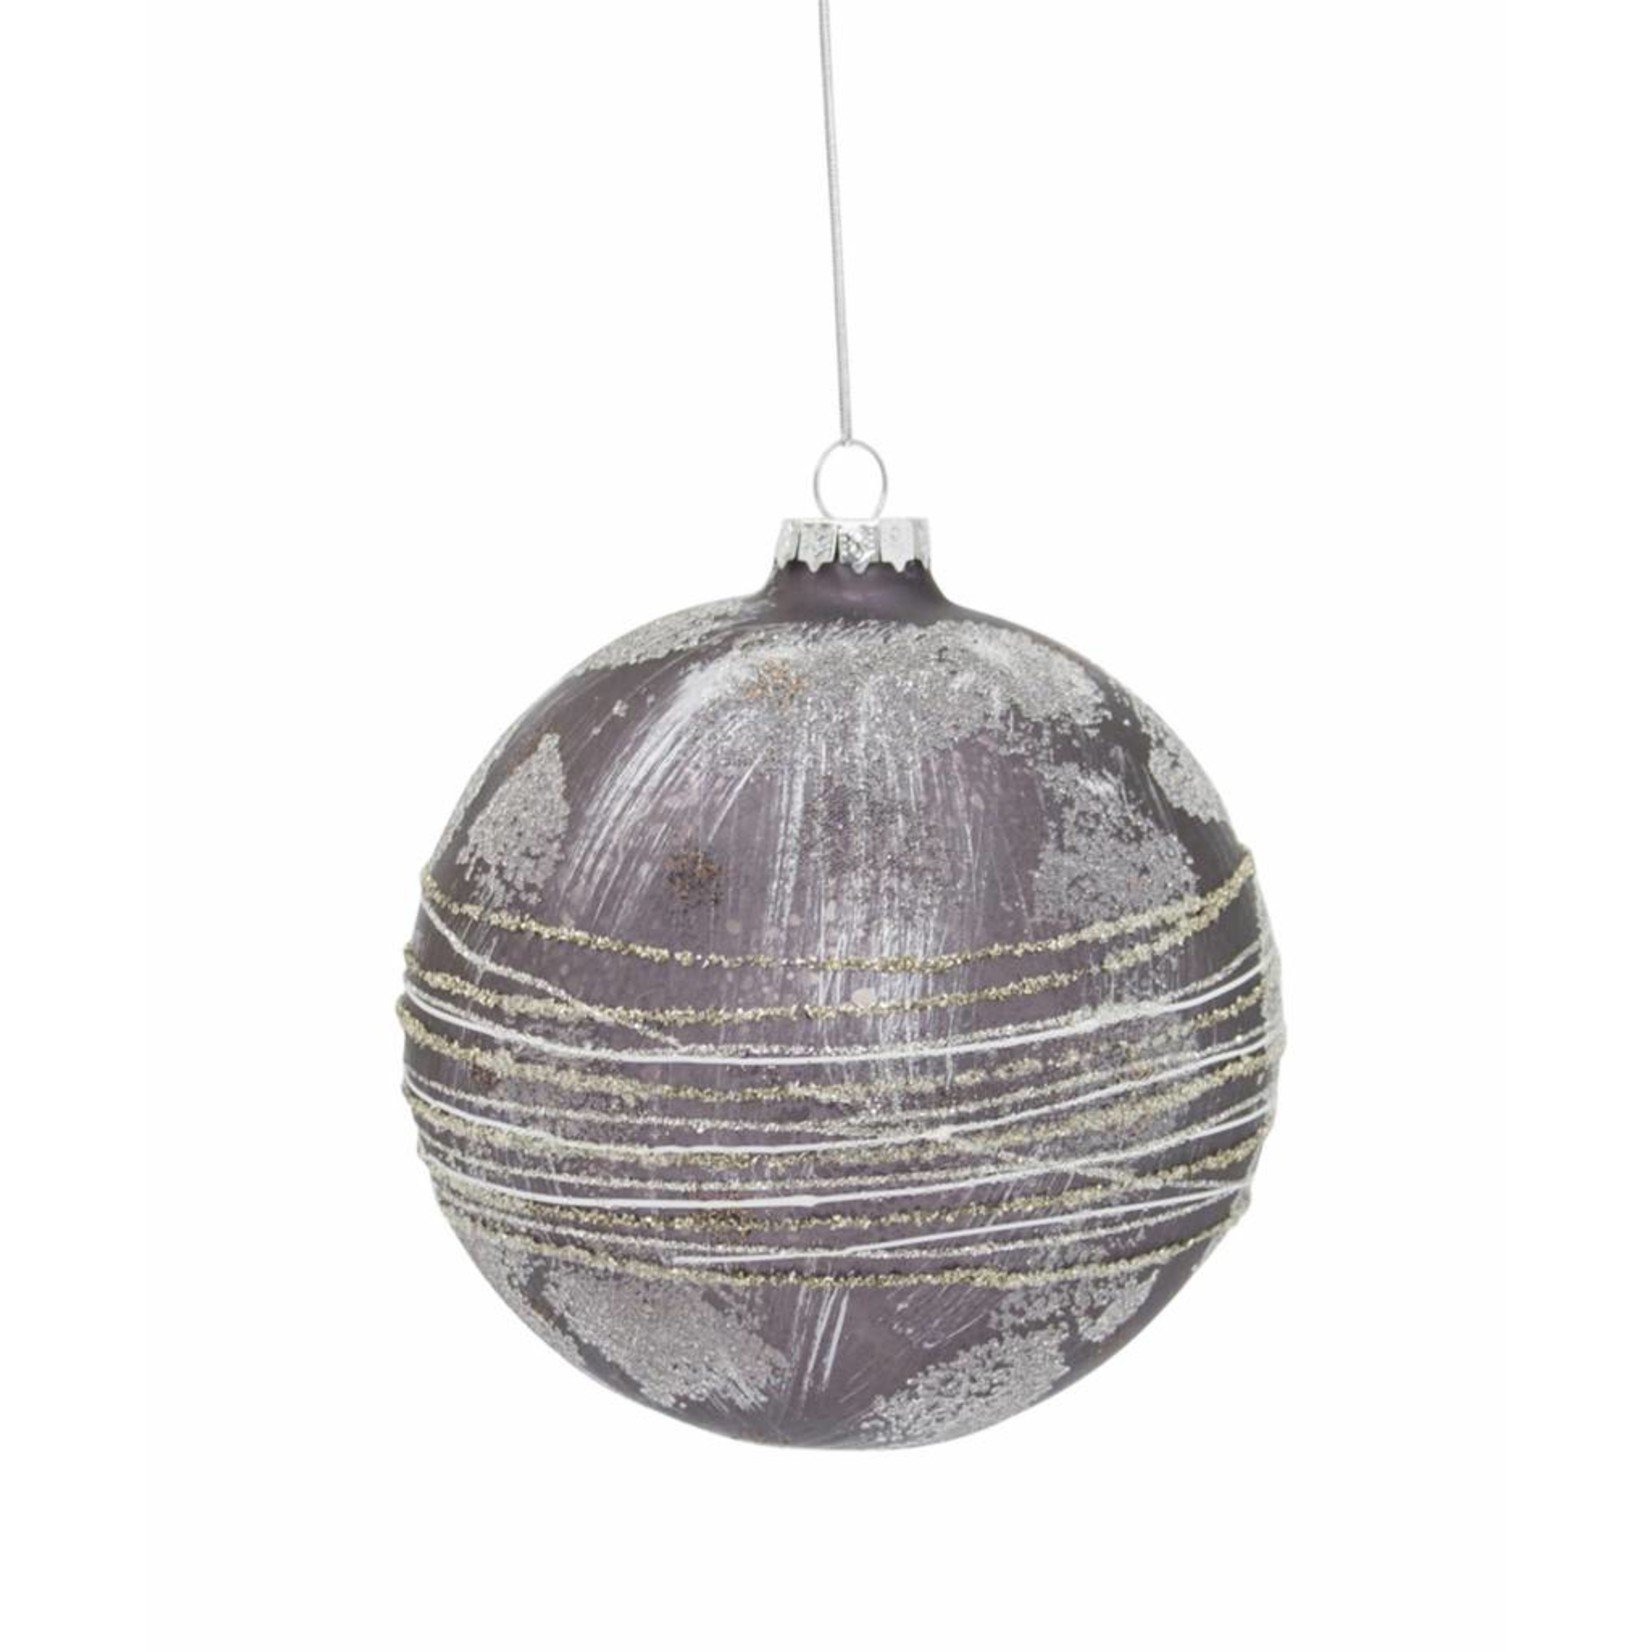 Ball Ornament 5"D Glass - Silver/Gold